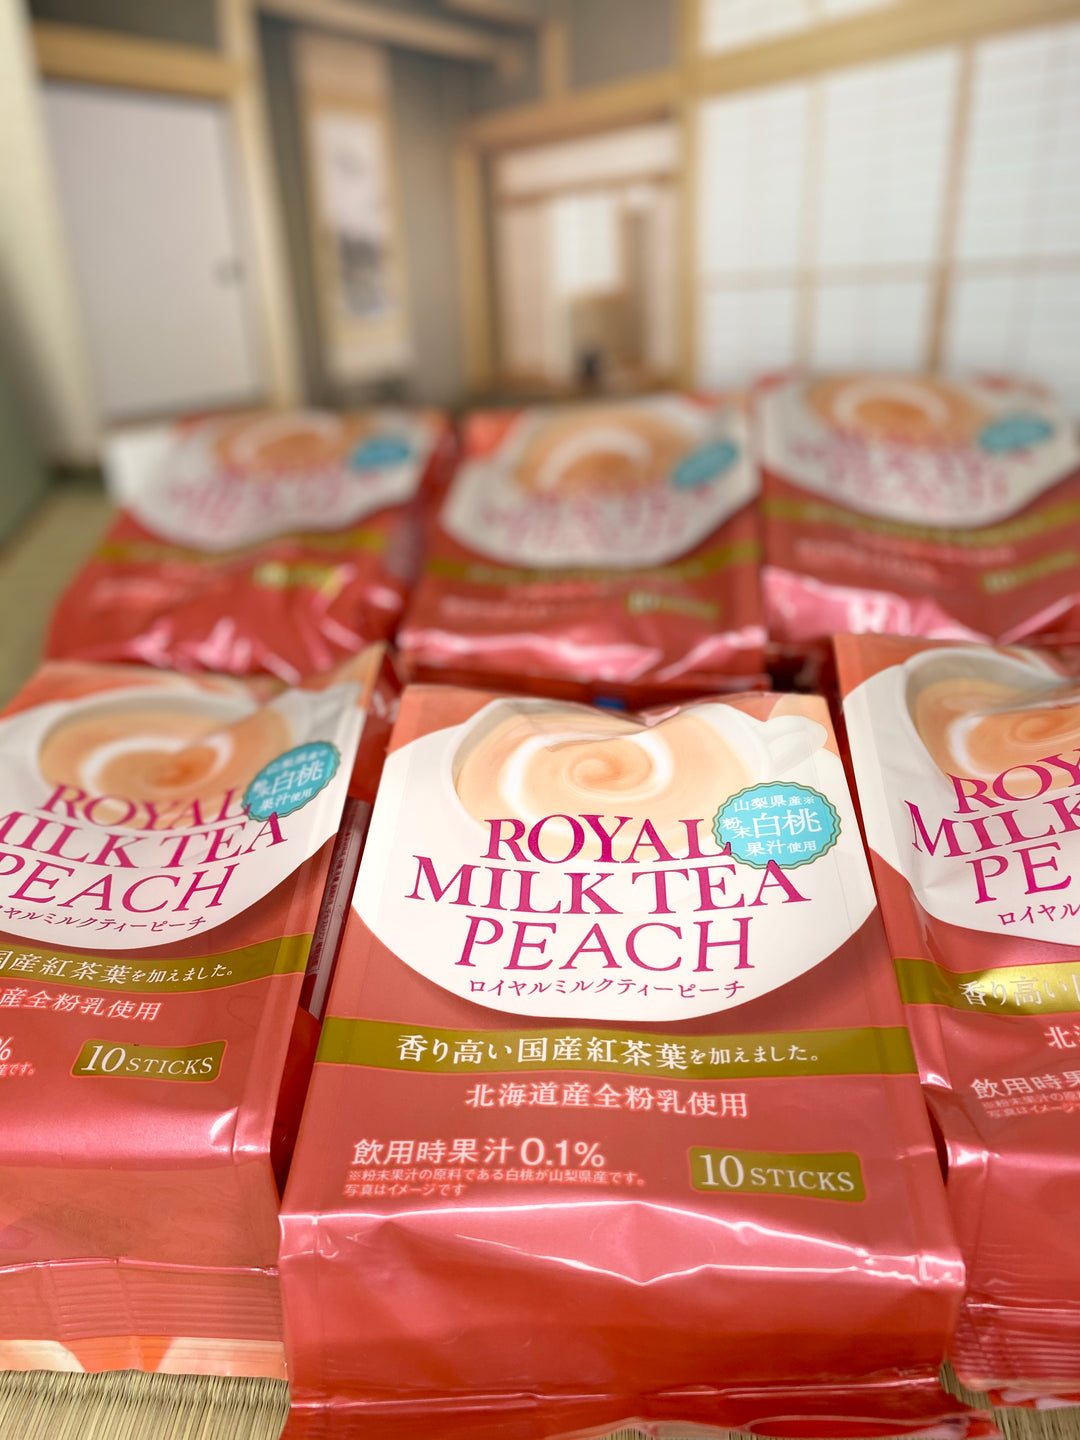 Nitto Black Tea Royal Milk Tea Peach 10 Sticks (140 grams)